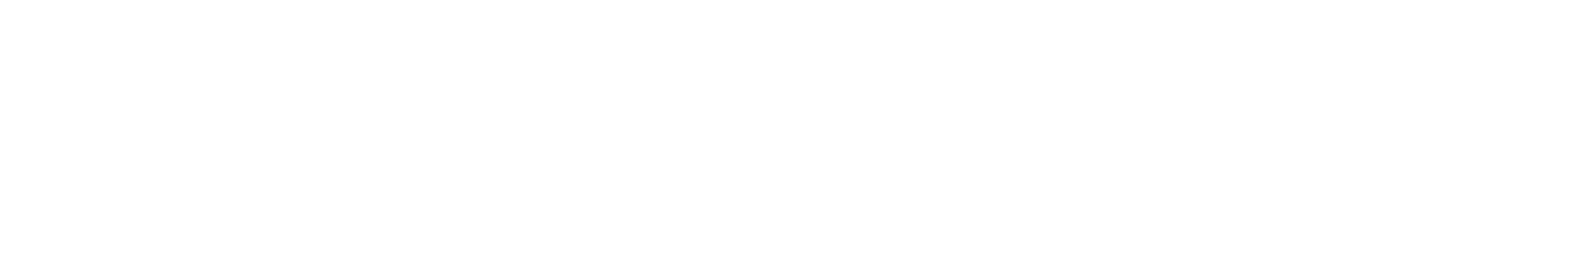 KeyCorp (KeyBank) logo grand pour les fonds sombres (PNG transparent)